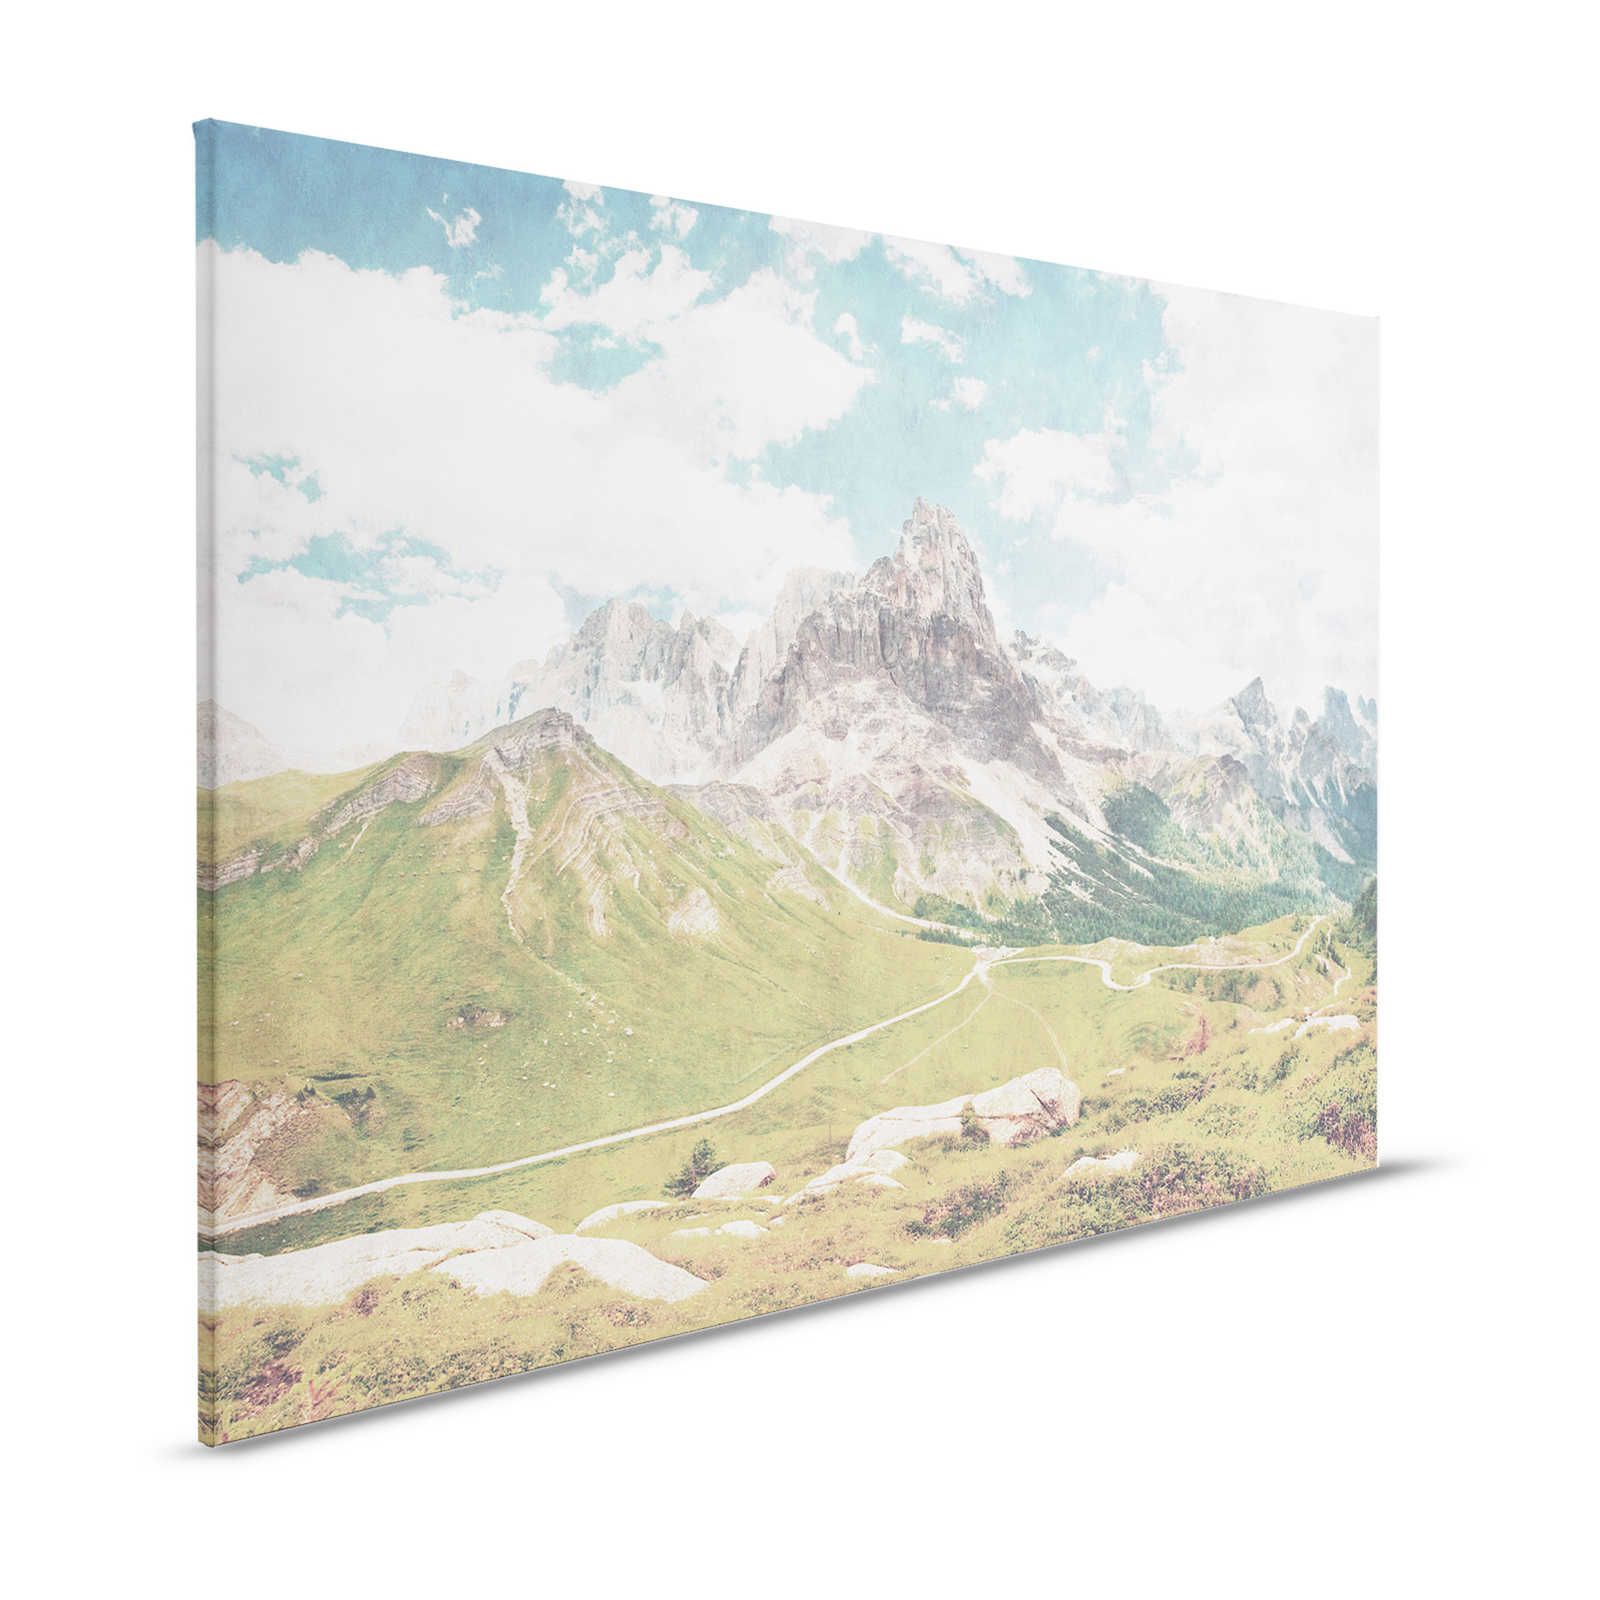 Dolomiti 2 - Quadro su tela Dolomiti Retro Fotografia - 1,20 m x 0,80 m
